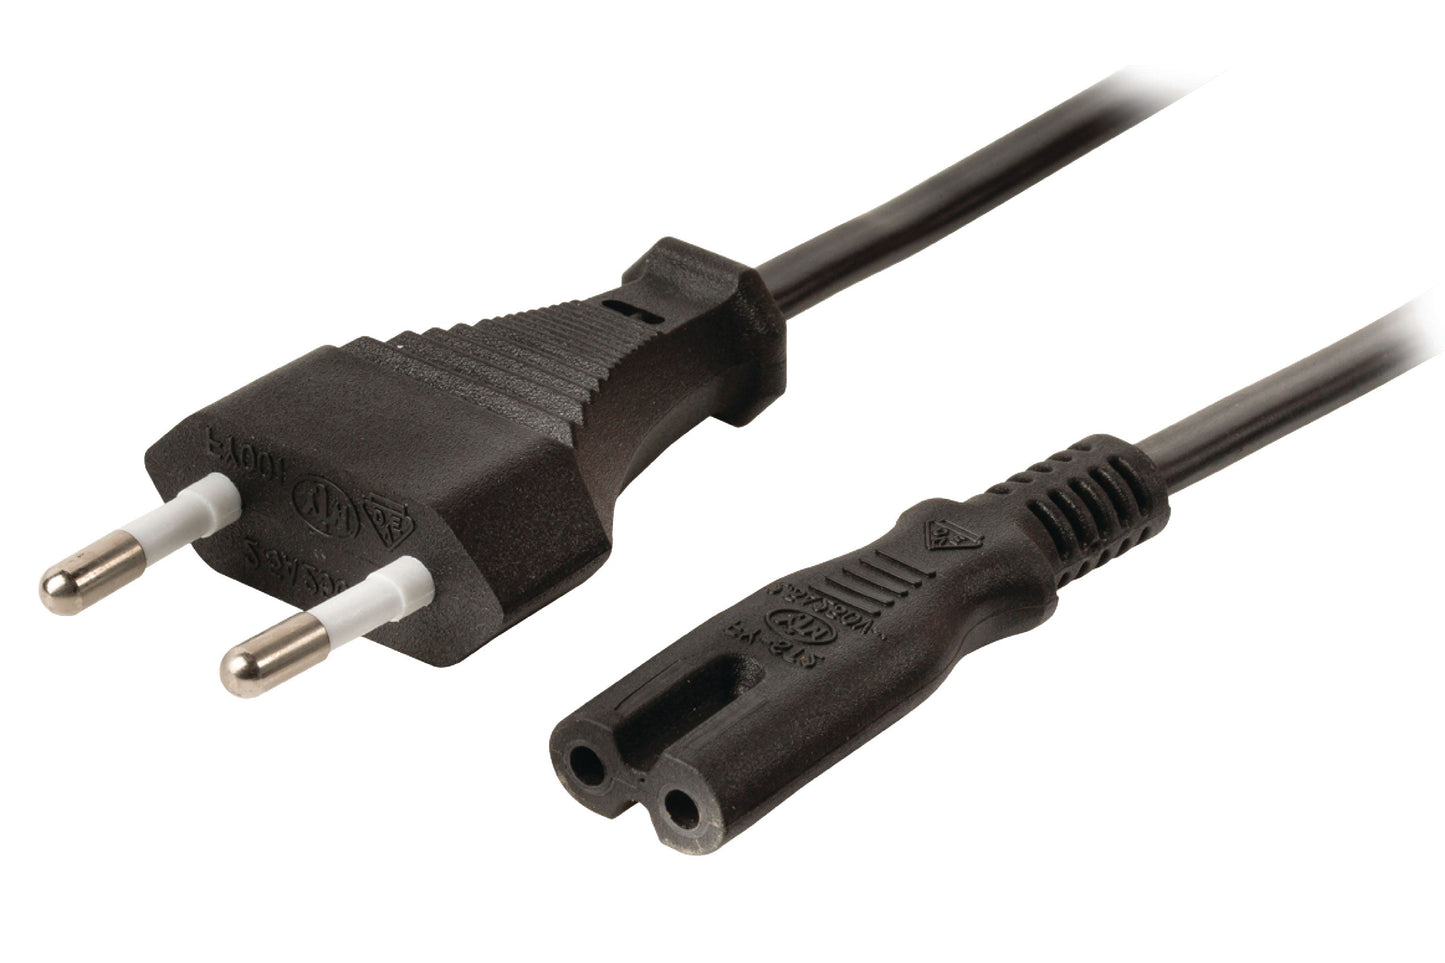 Maplin Power Lead IEC C7 Fig 8 2 Pin Plug to Euro 2 Pin Plug - 5m (Not Fused) - maplin.co.uk